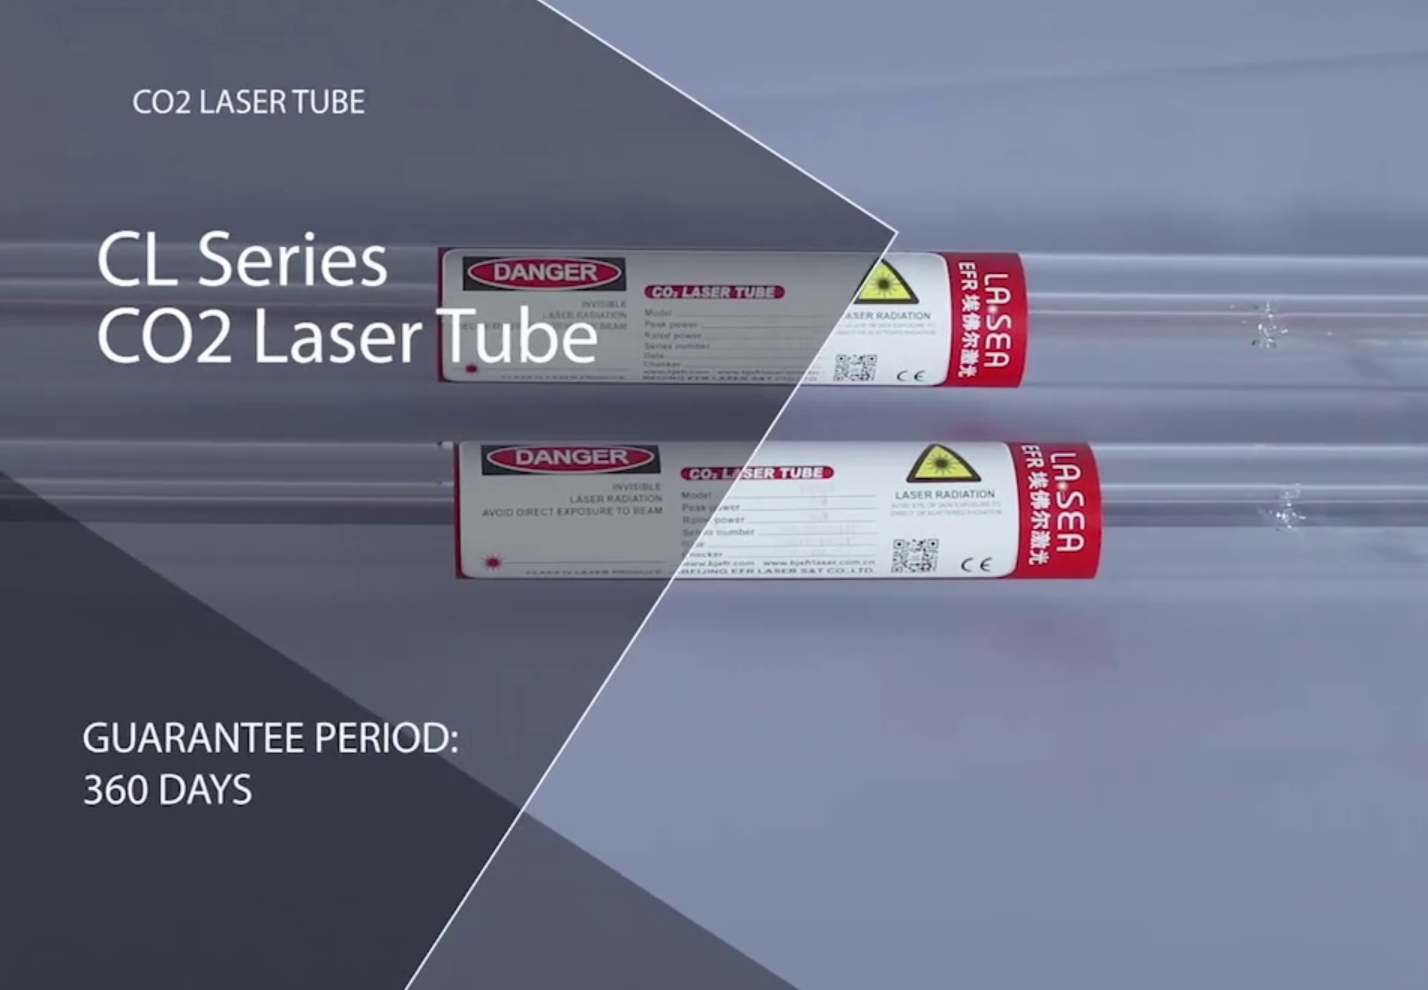  CL series laser tube